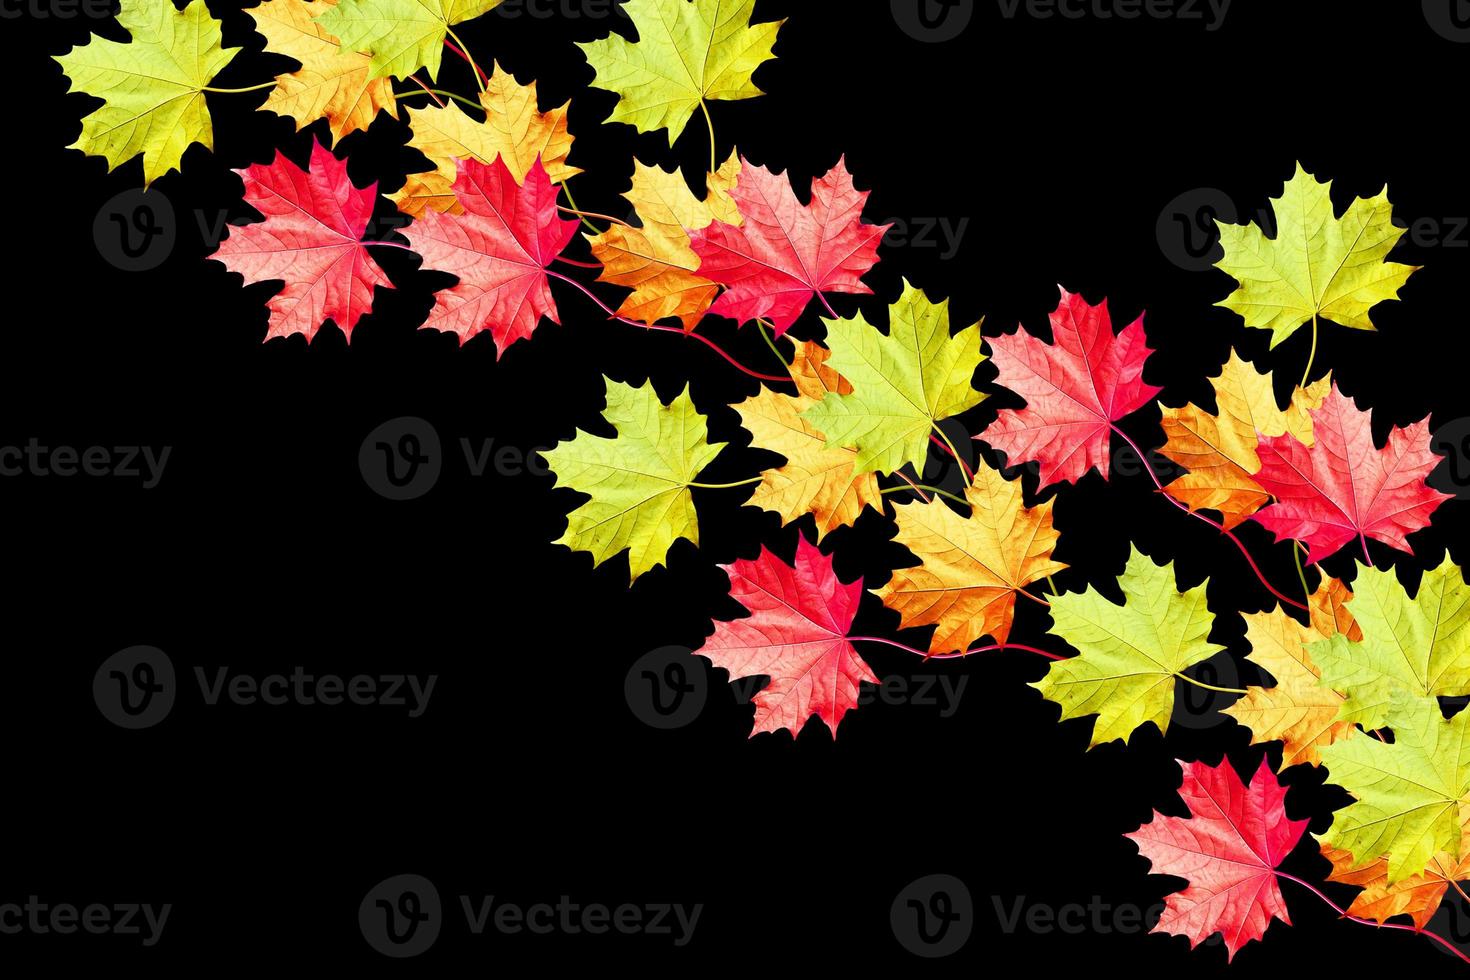 hojas de otoño aisladas sobre fondo negro. foto